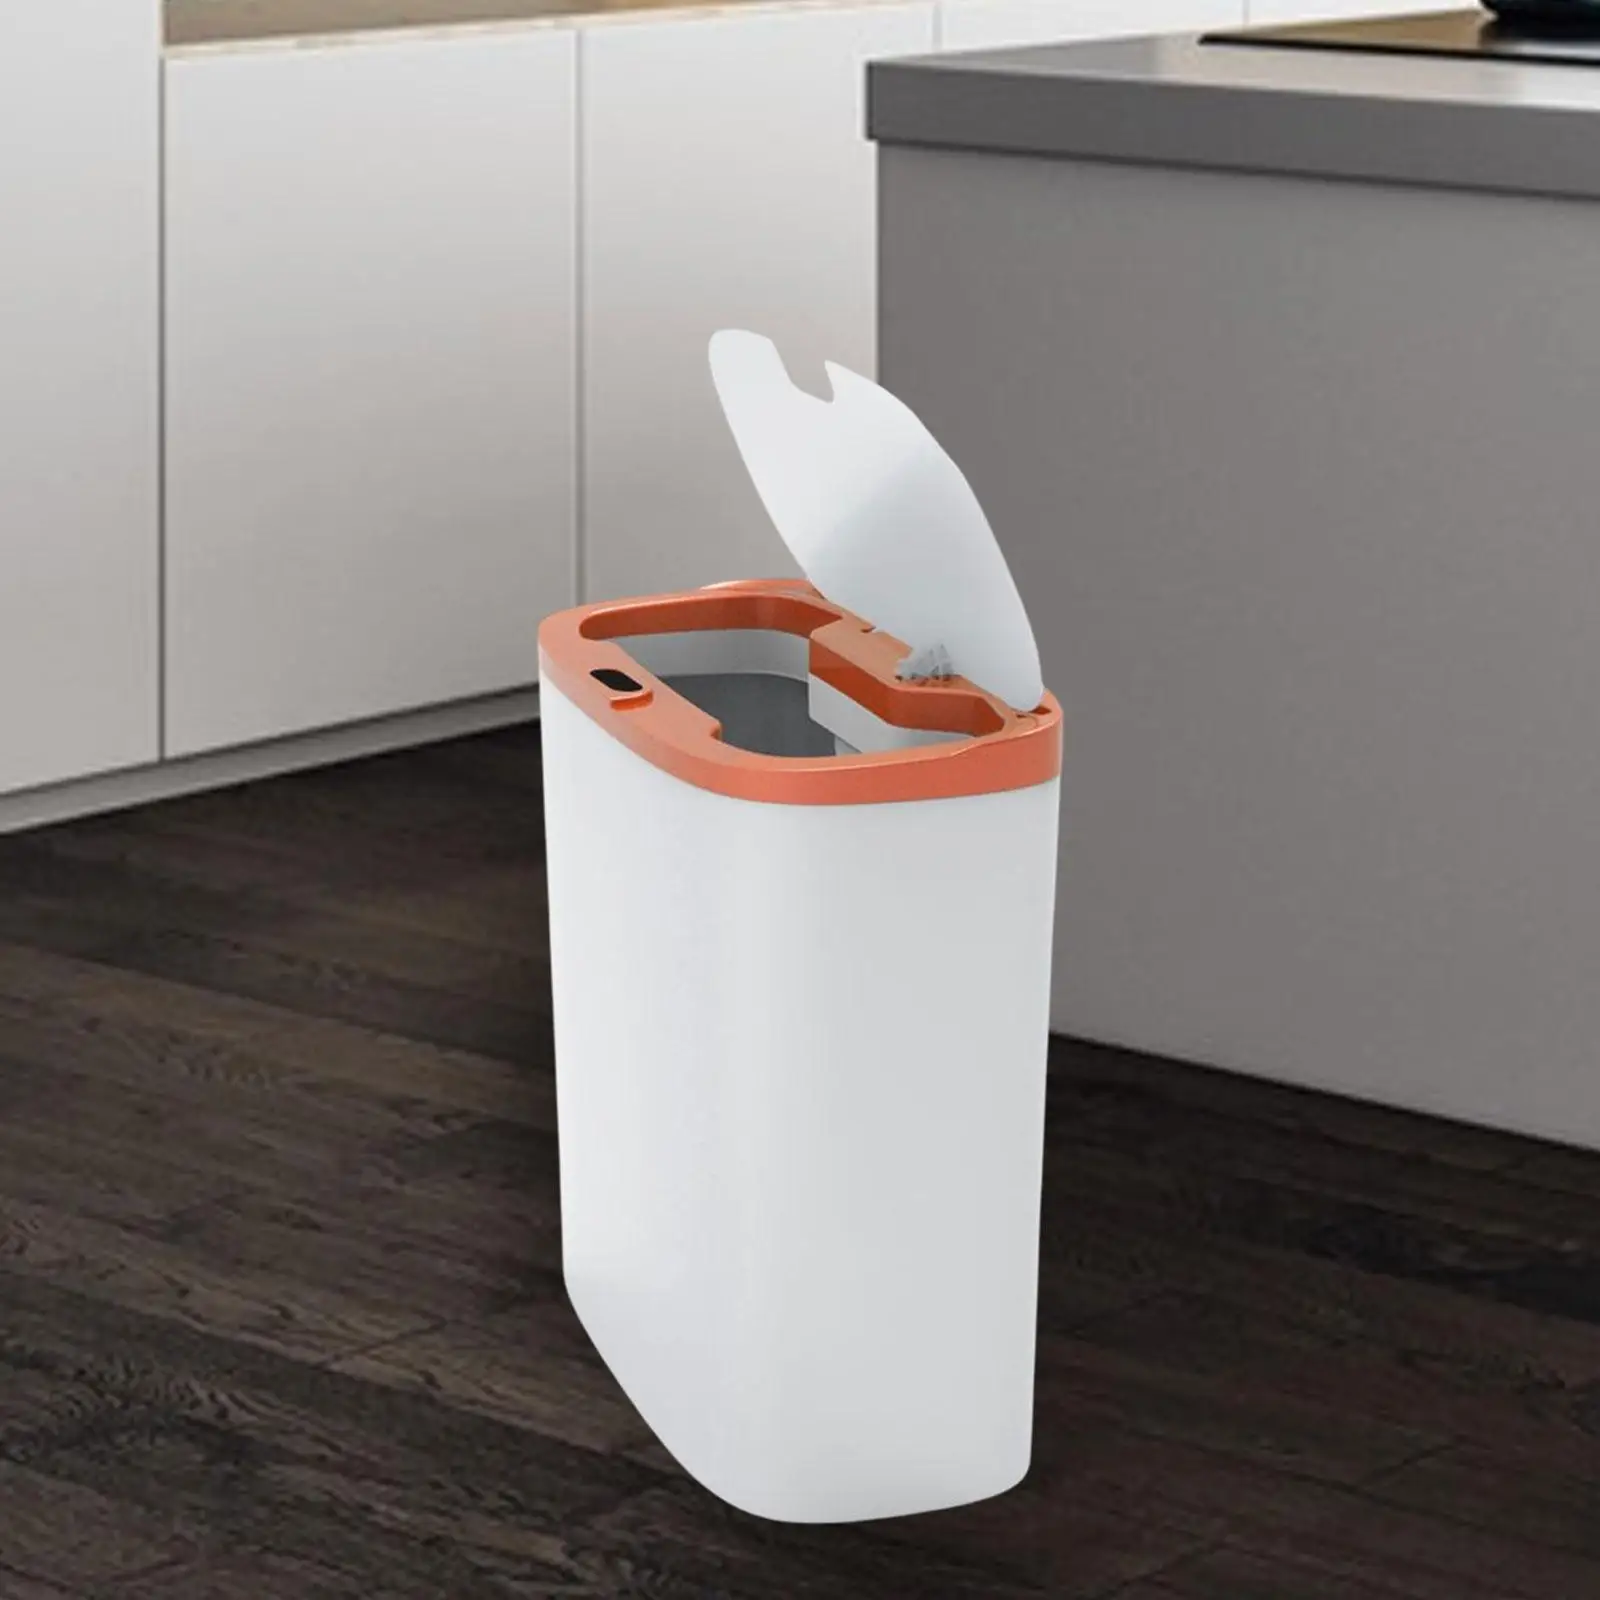 Rechargable Sensor Trash Can Garbage Waste Can Smart Induction Trash Bin for Bathroom Laundry